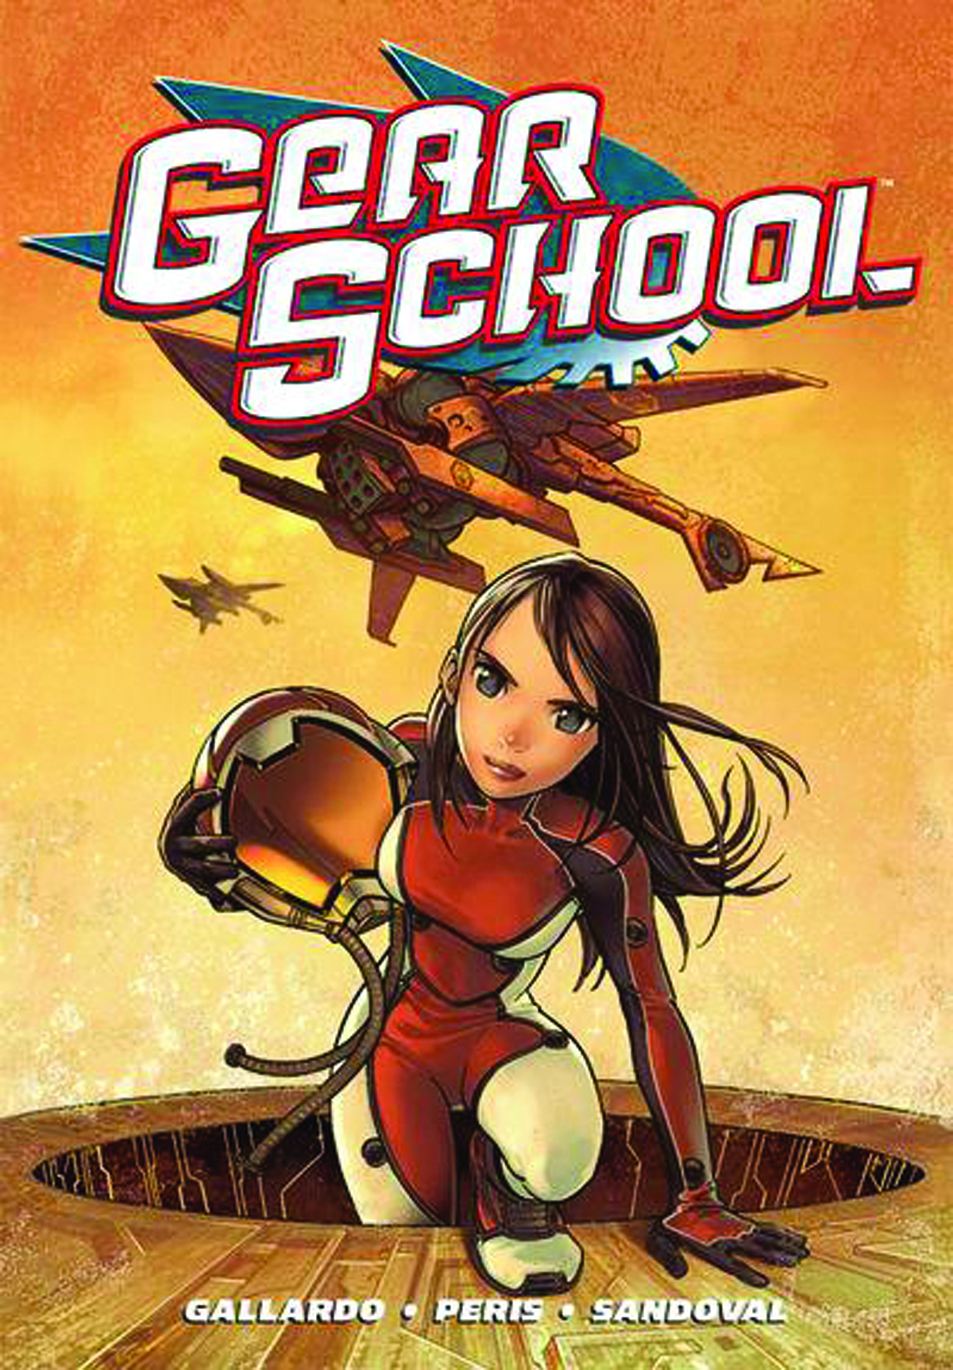 Gear School Graphic Novel Volume 1